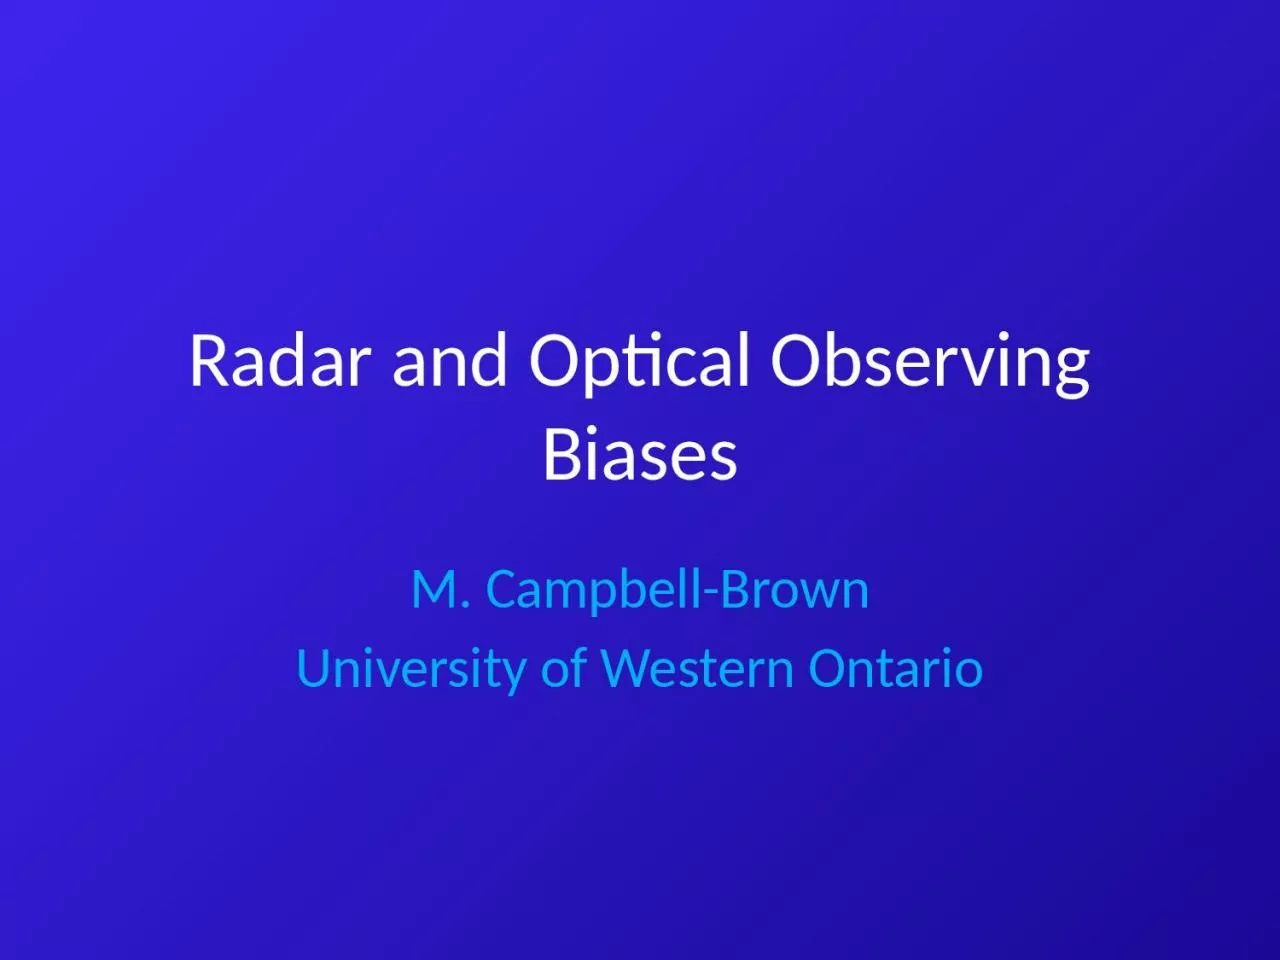 Radar and Optical Observing Biases